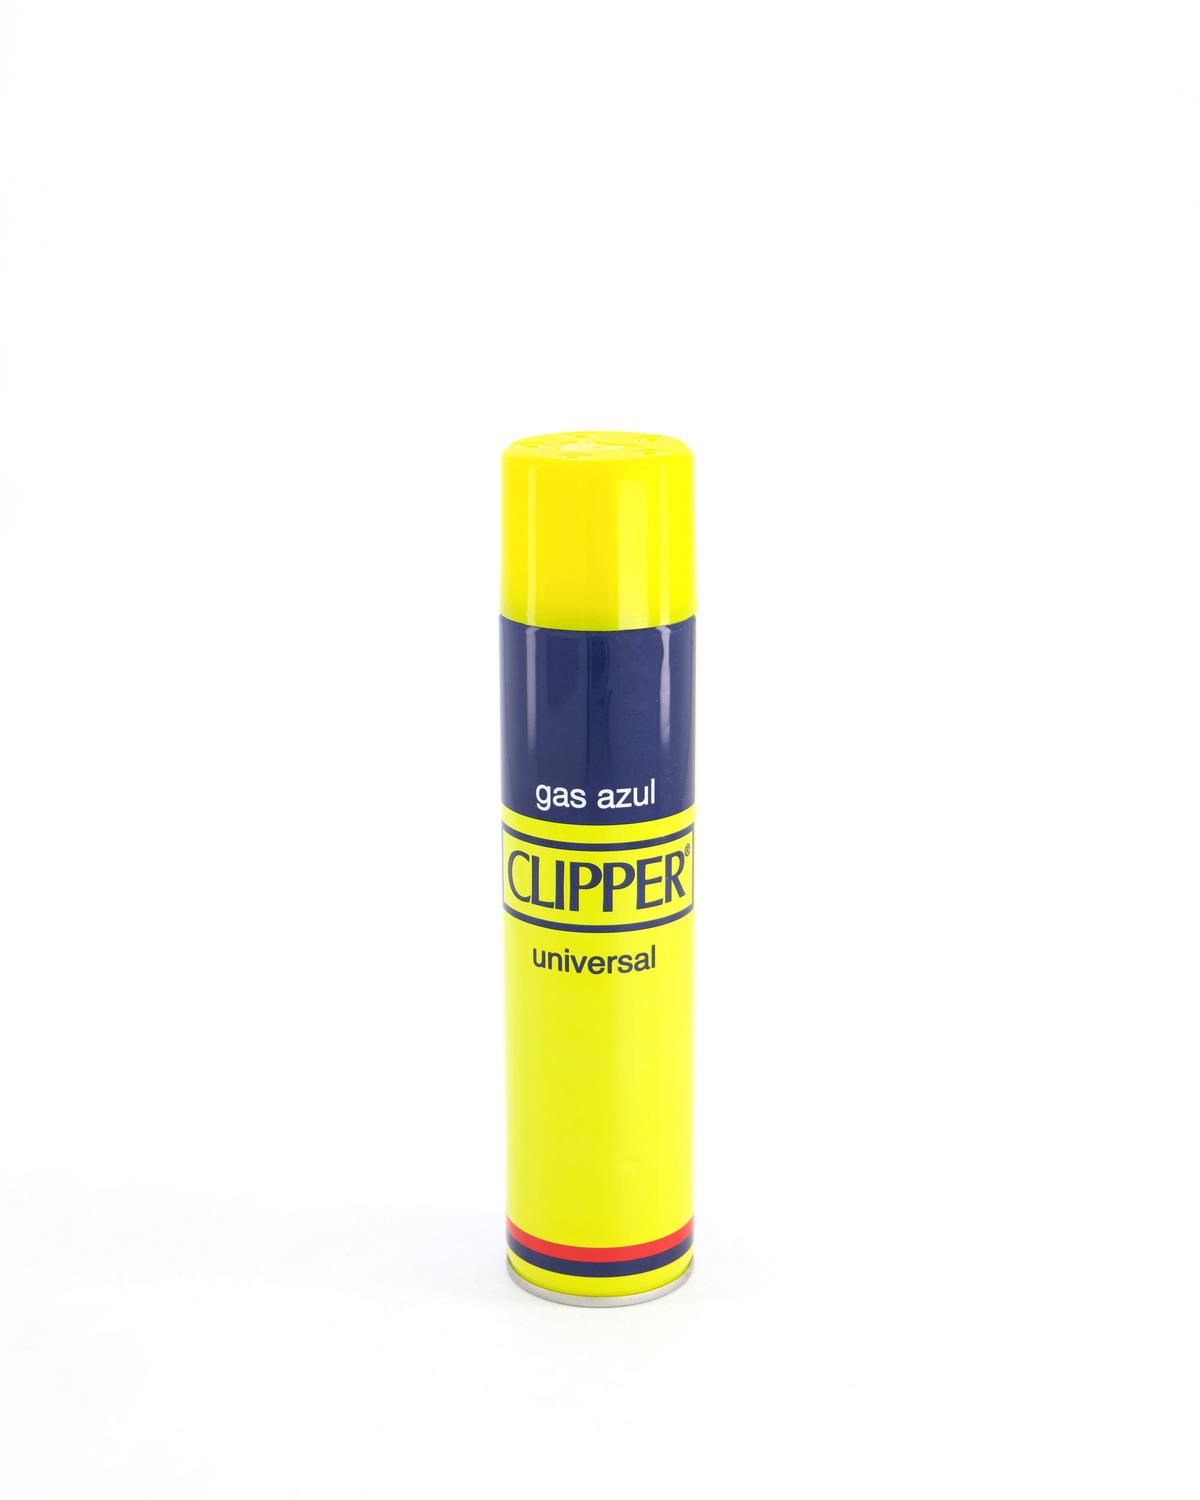 Clipper 300ml Butane Gas -  Yellow